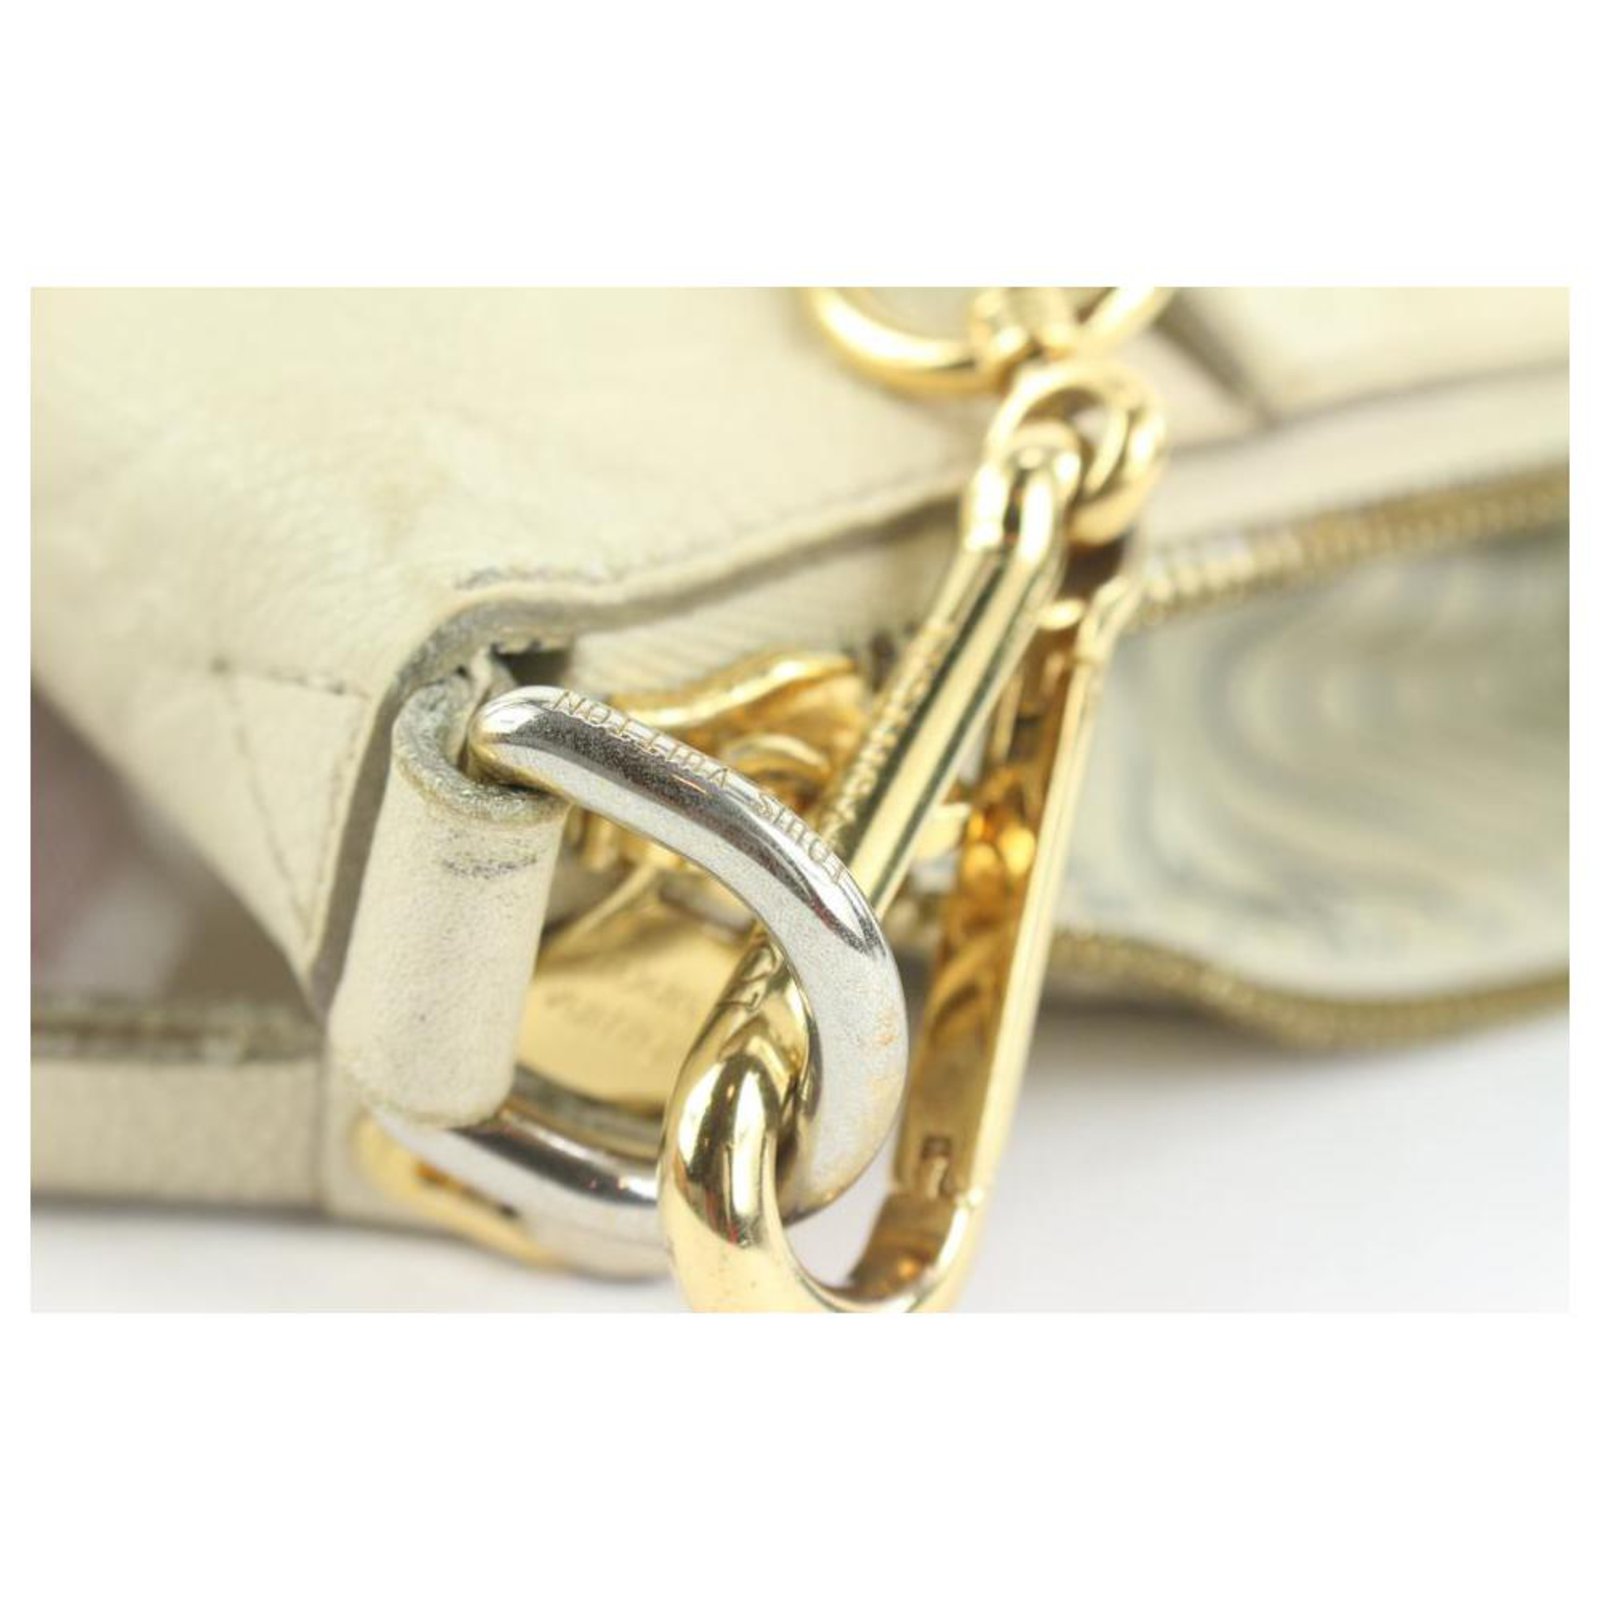 Louis Vuitton Neige Monogram Empreinte Leather Lumineuse PM Bag